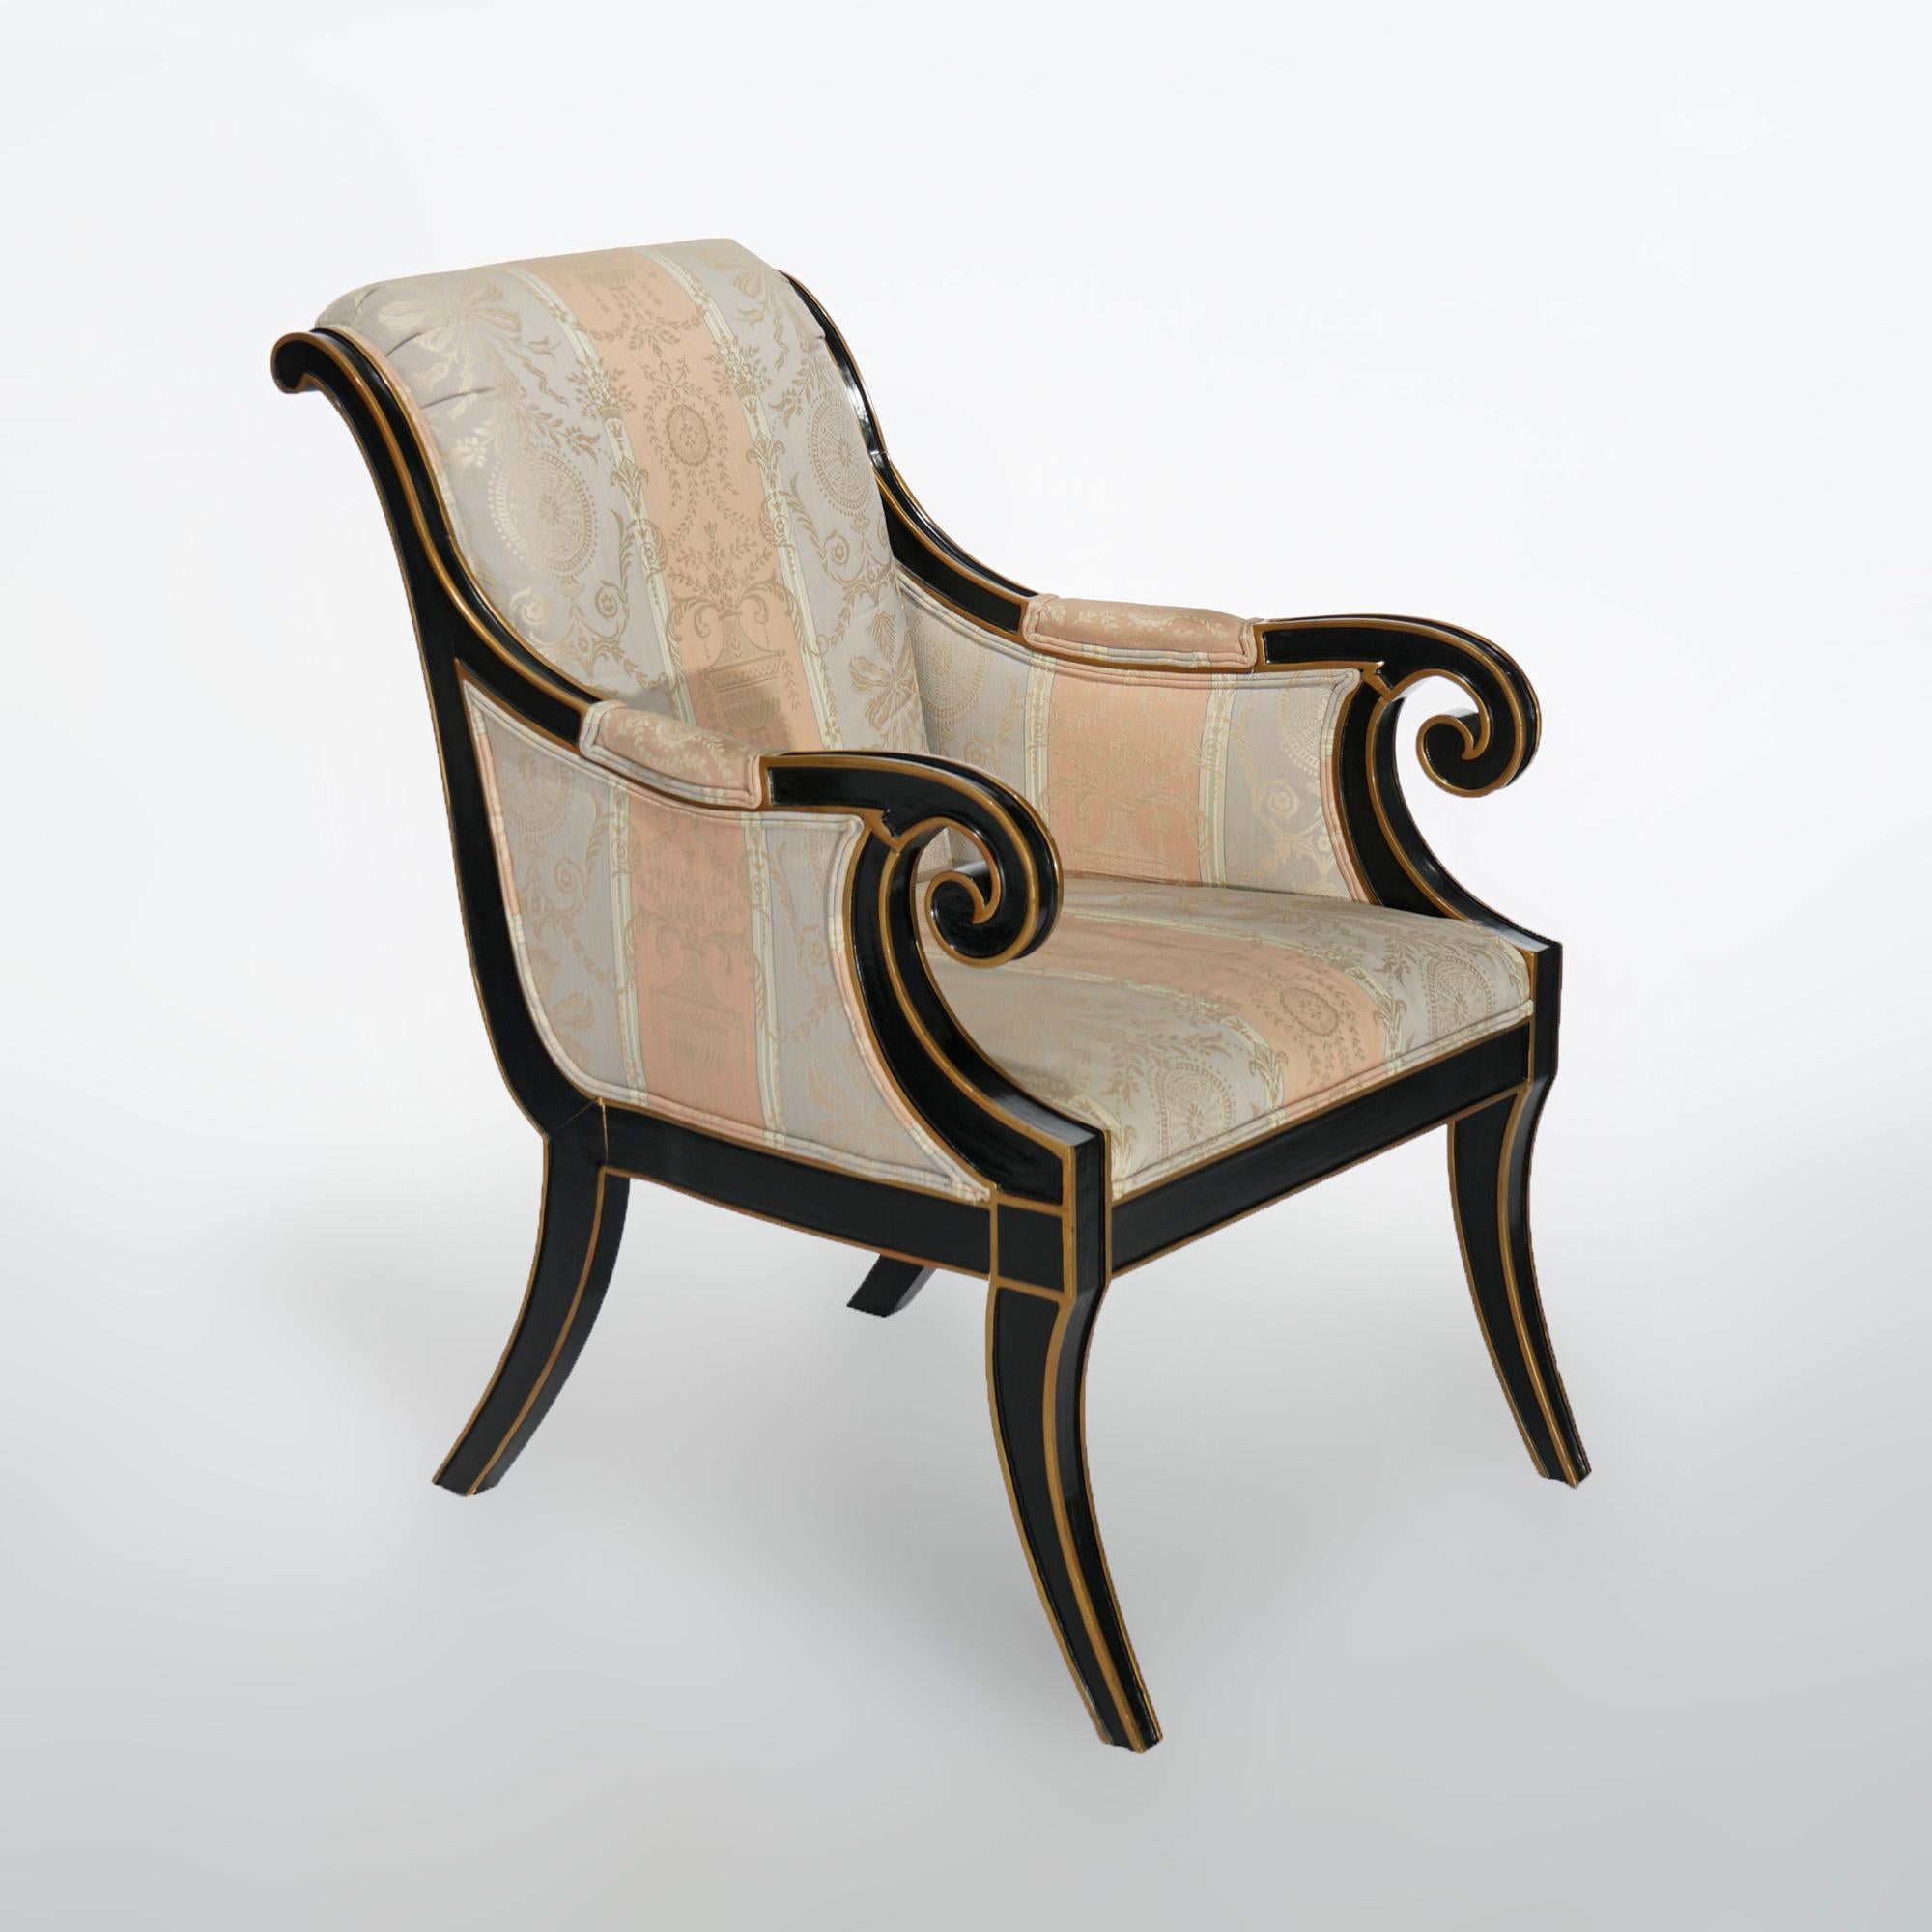 Upholstery Drexel Heritage French Empire Ebonized & Gilt Upholstered Arm Chairs 20thC